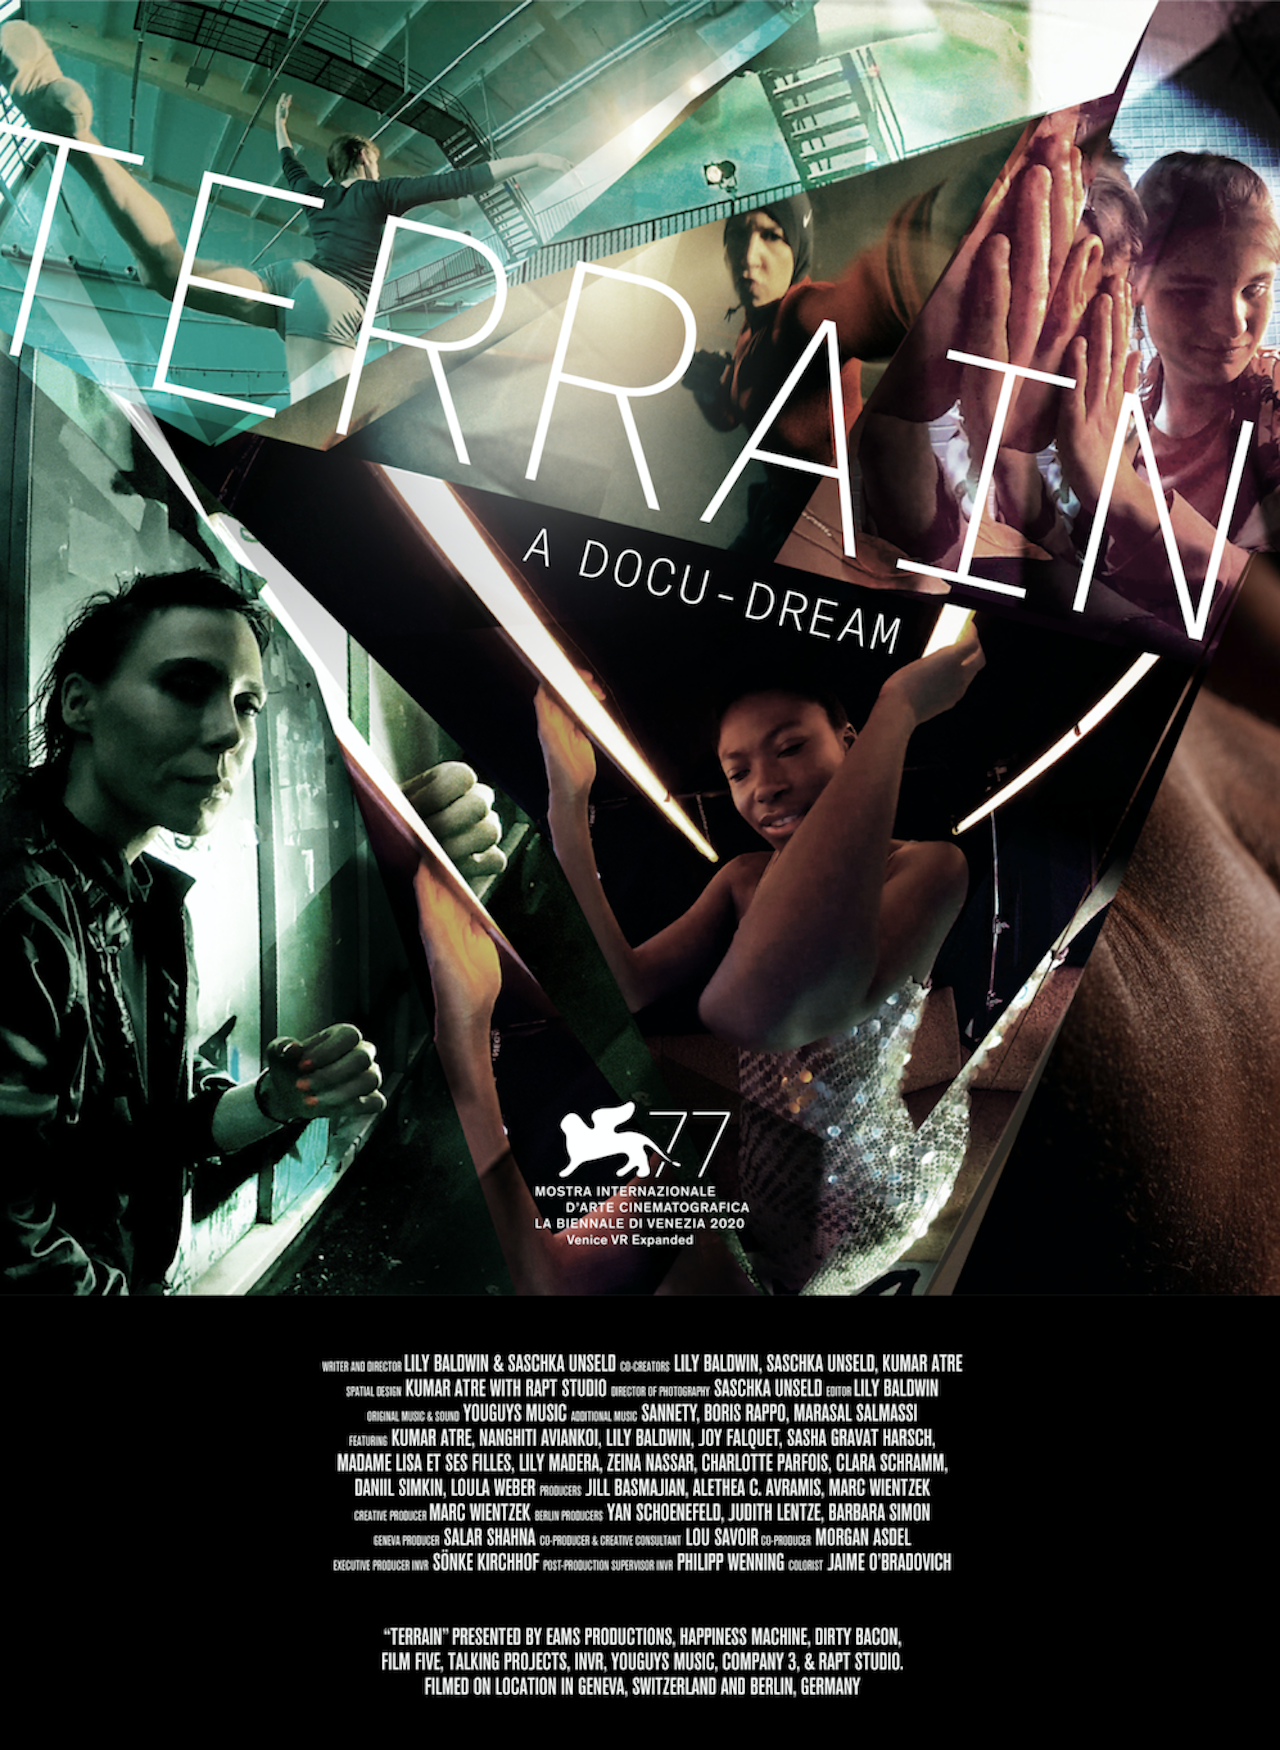 Terrain has its world premiere at Venice Biennale’s Venice Film Festival.